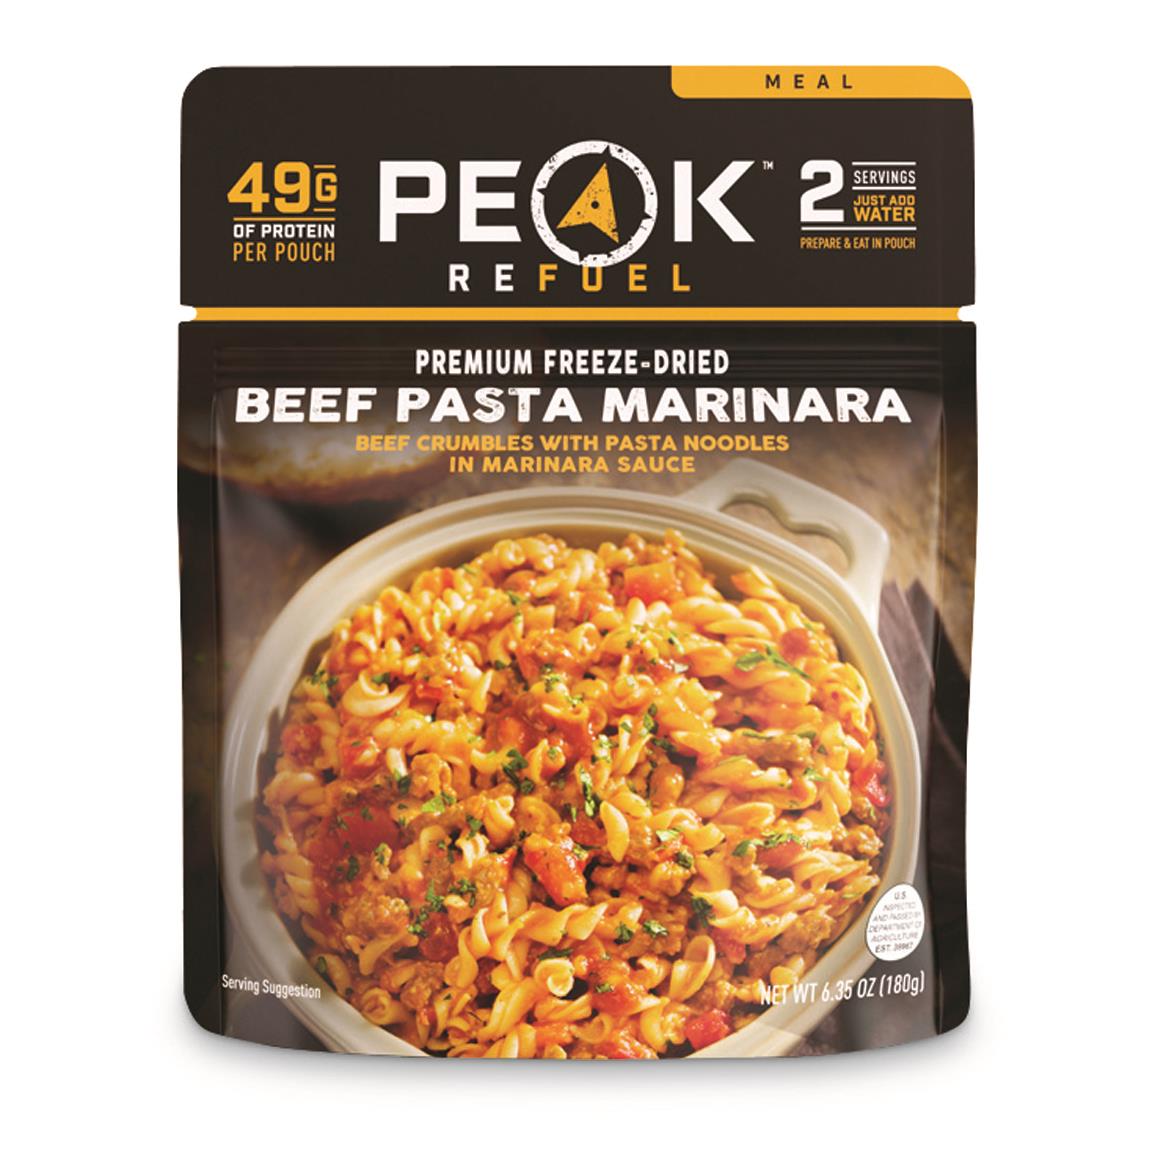 Beef Pasta Marinara